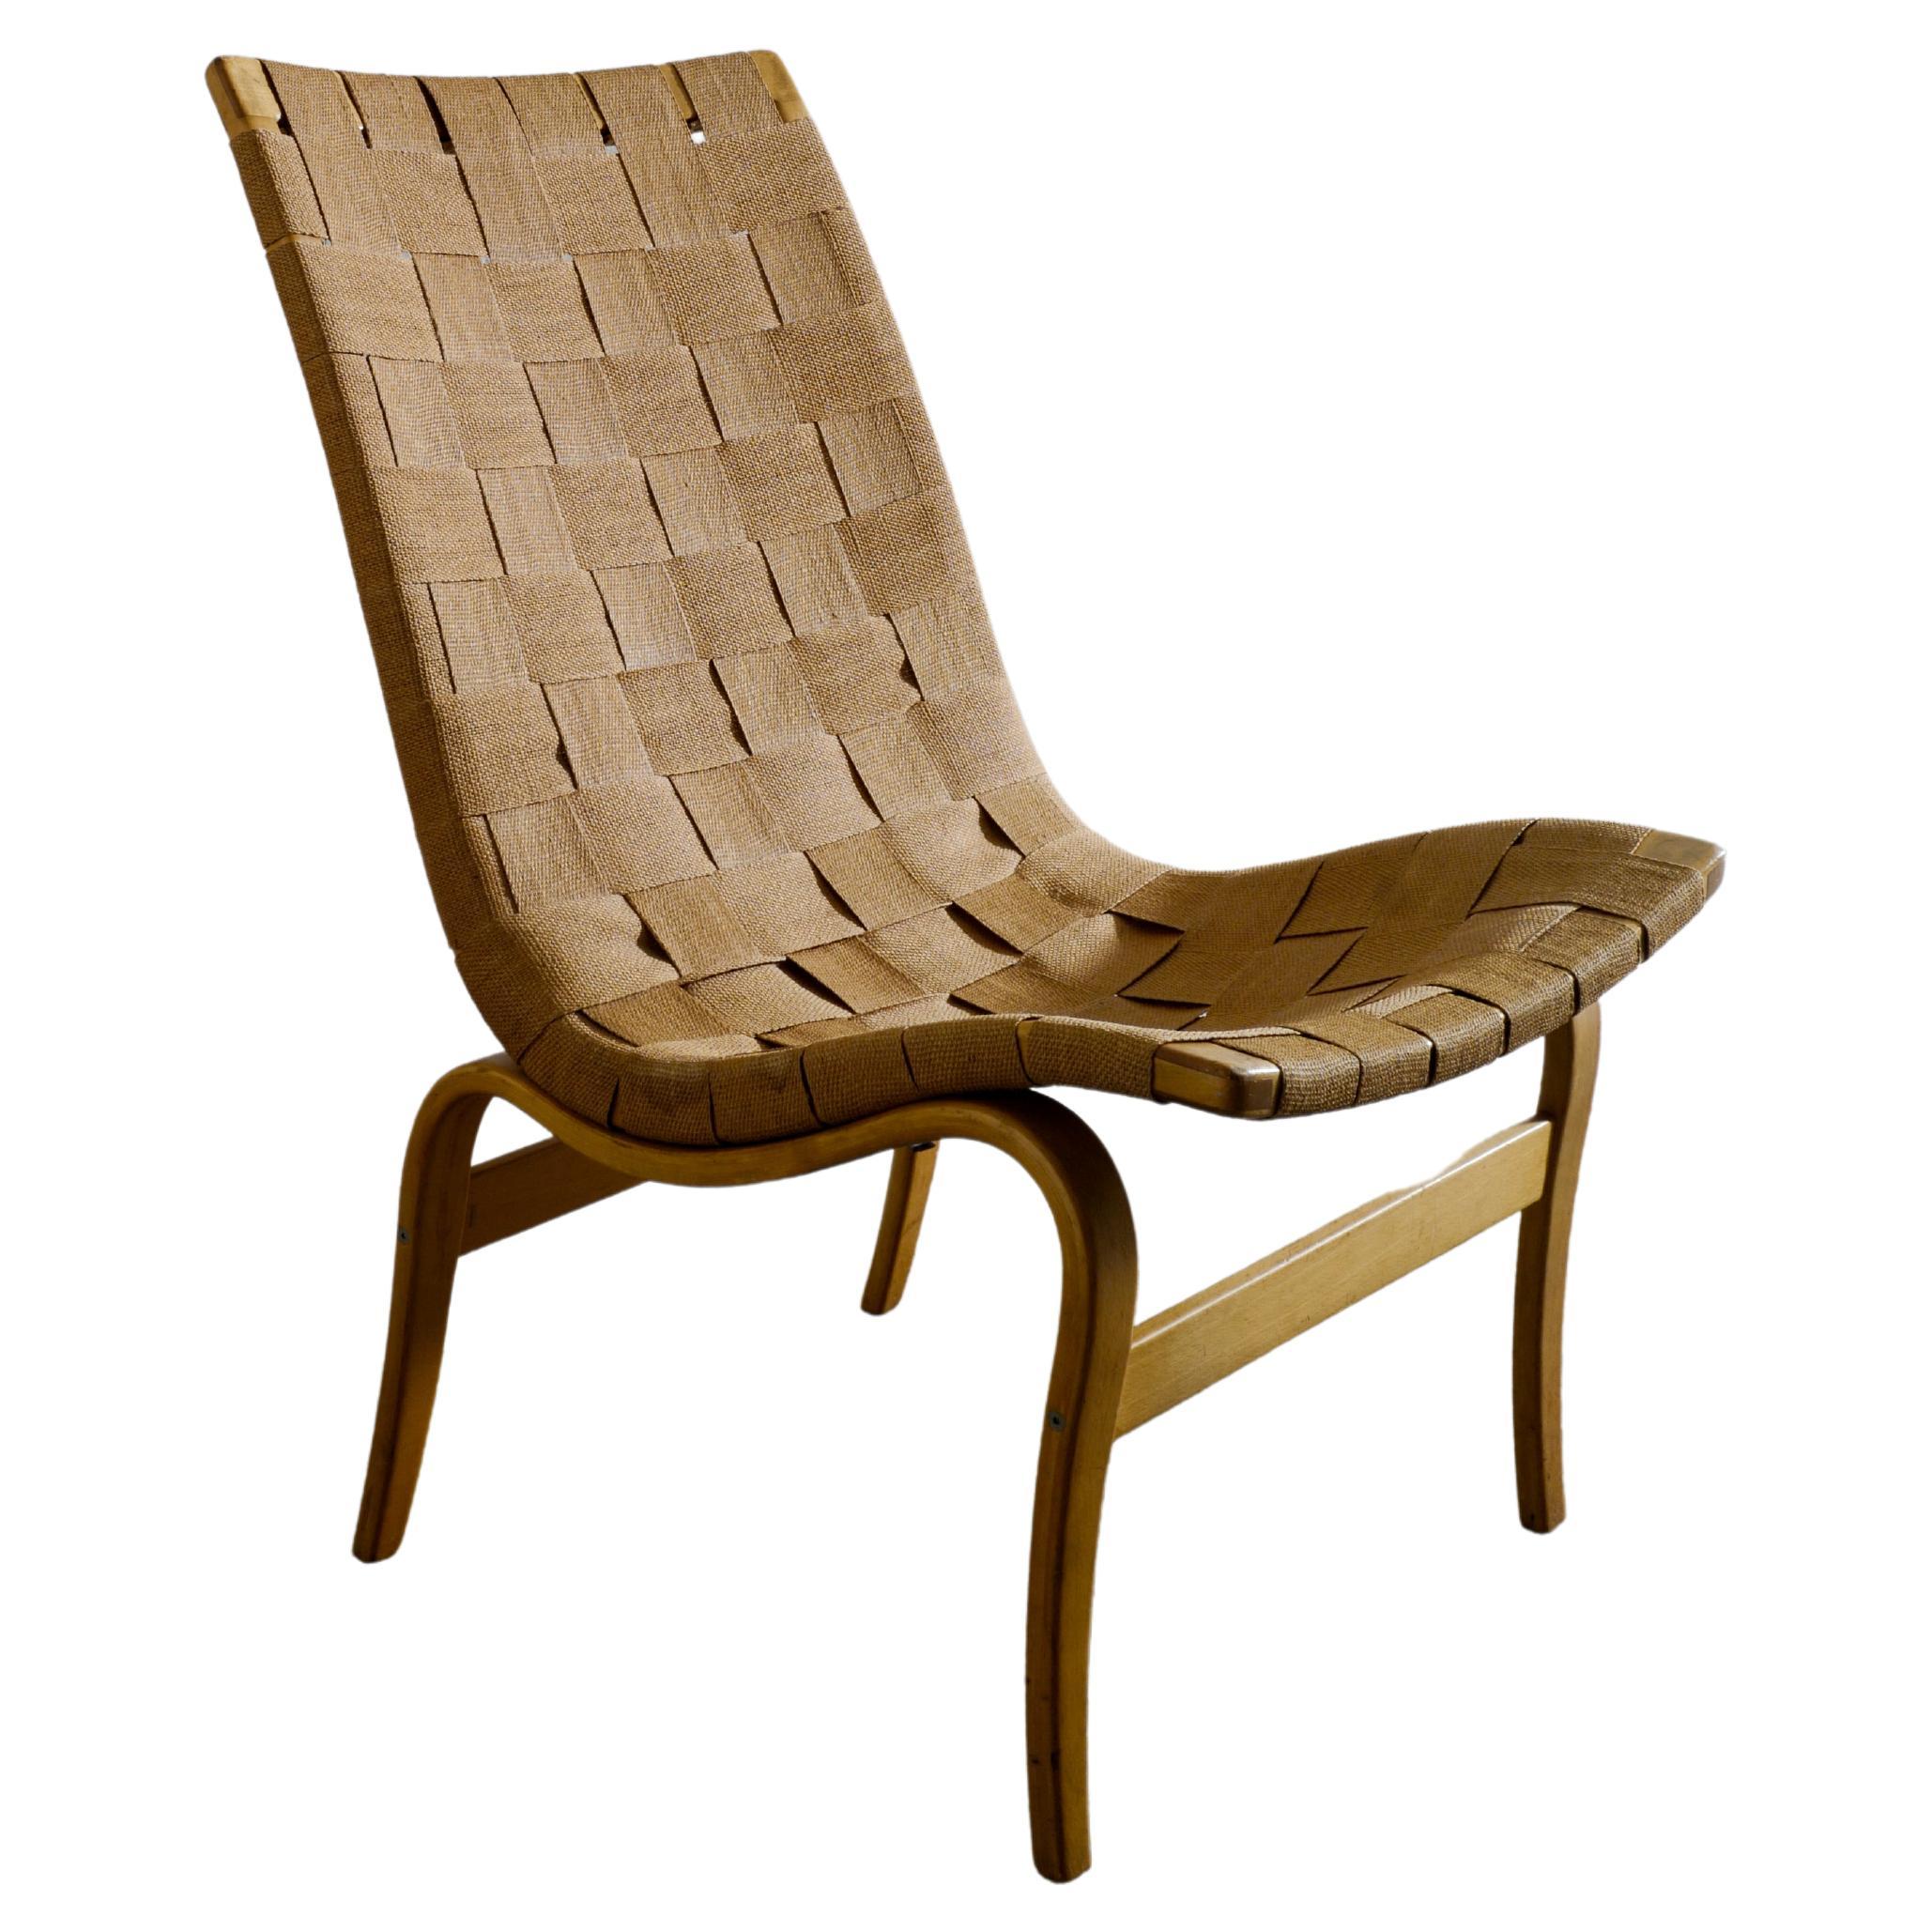 Bruno Mathsson Mid-Century Easy Chair "Arbetsstolen" Produced in Sweden, 1960s For Sale